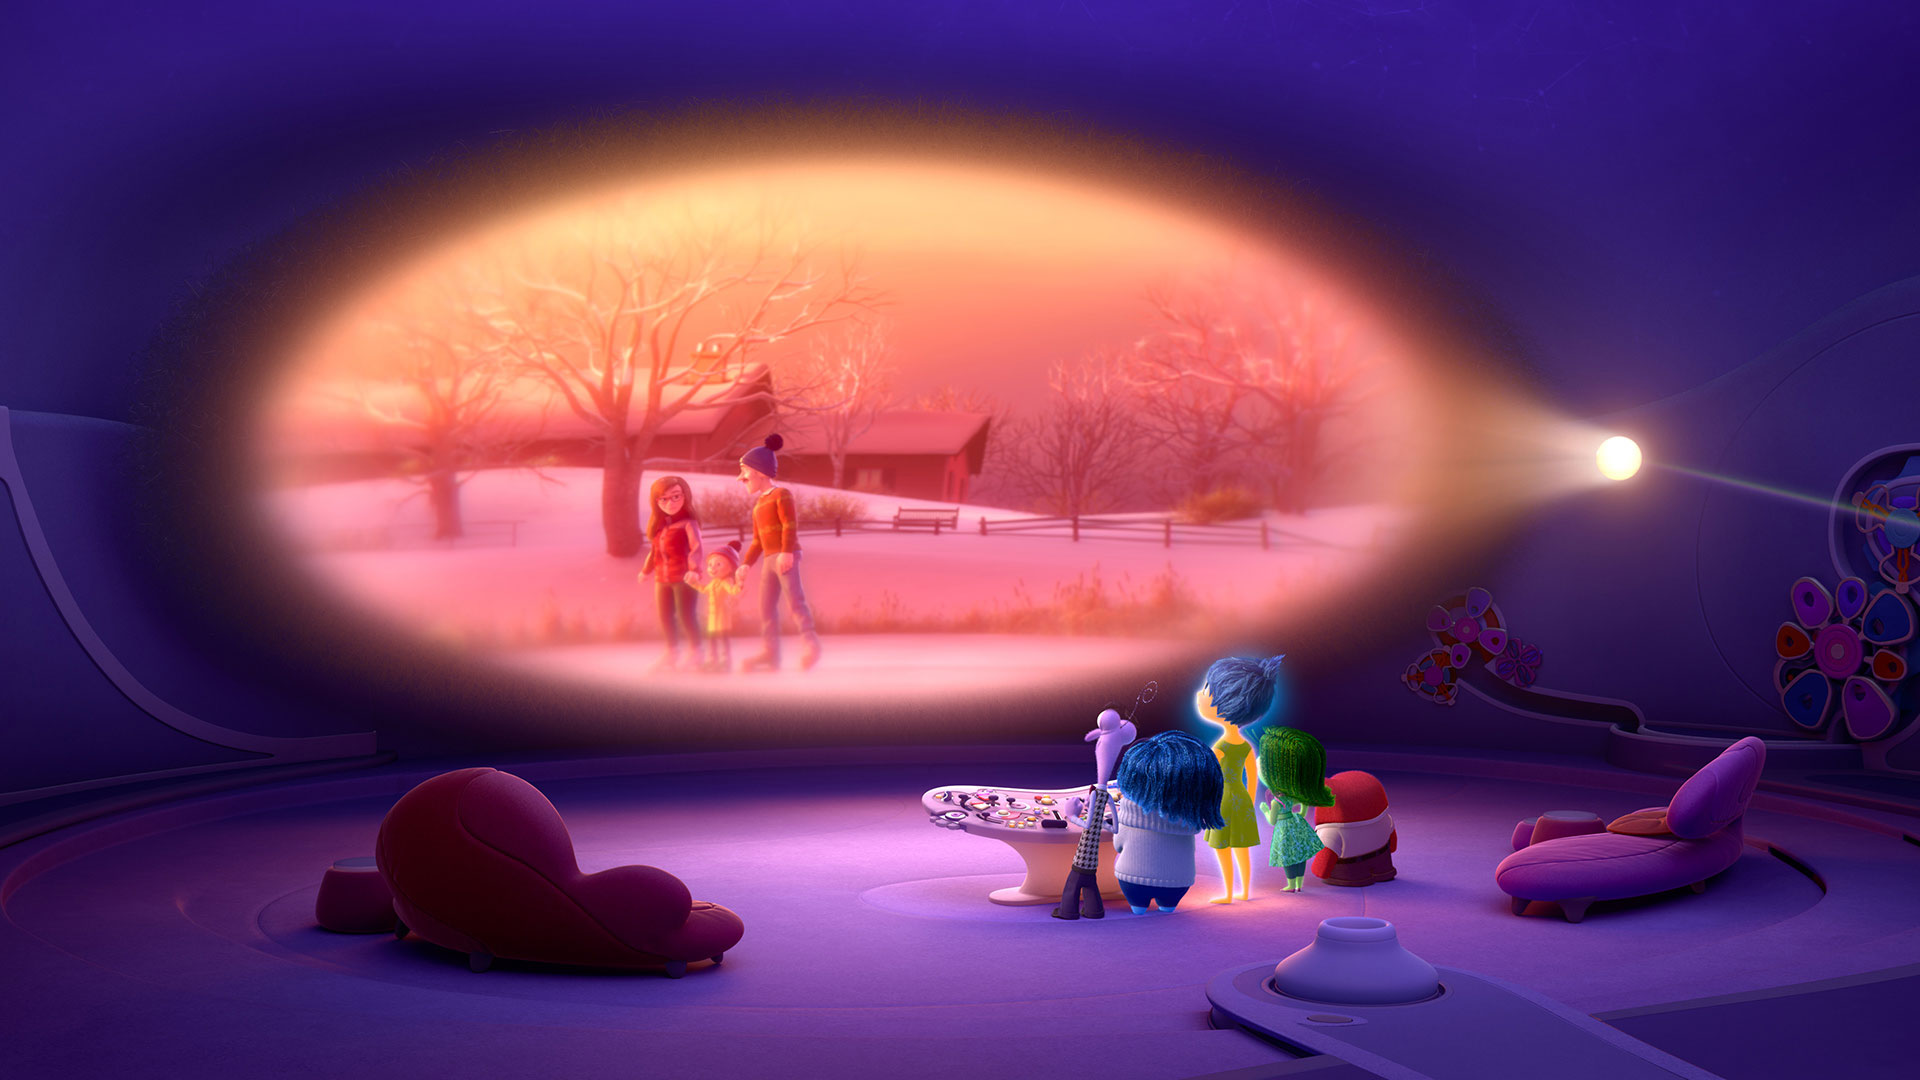 Disney Inside Out 2015 Movie Wallpapers Desktop iPhone 6